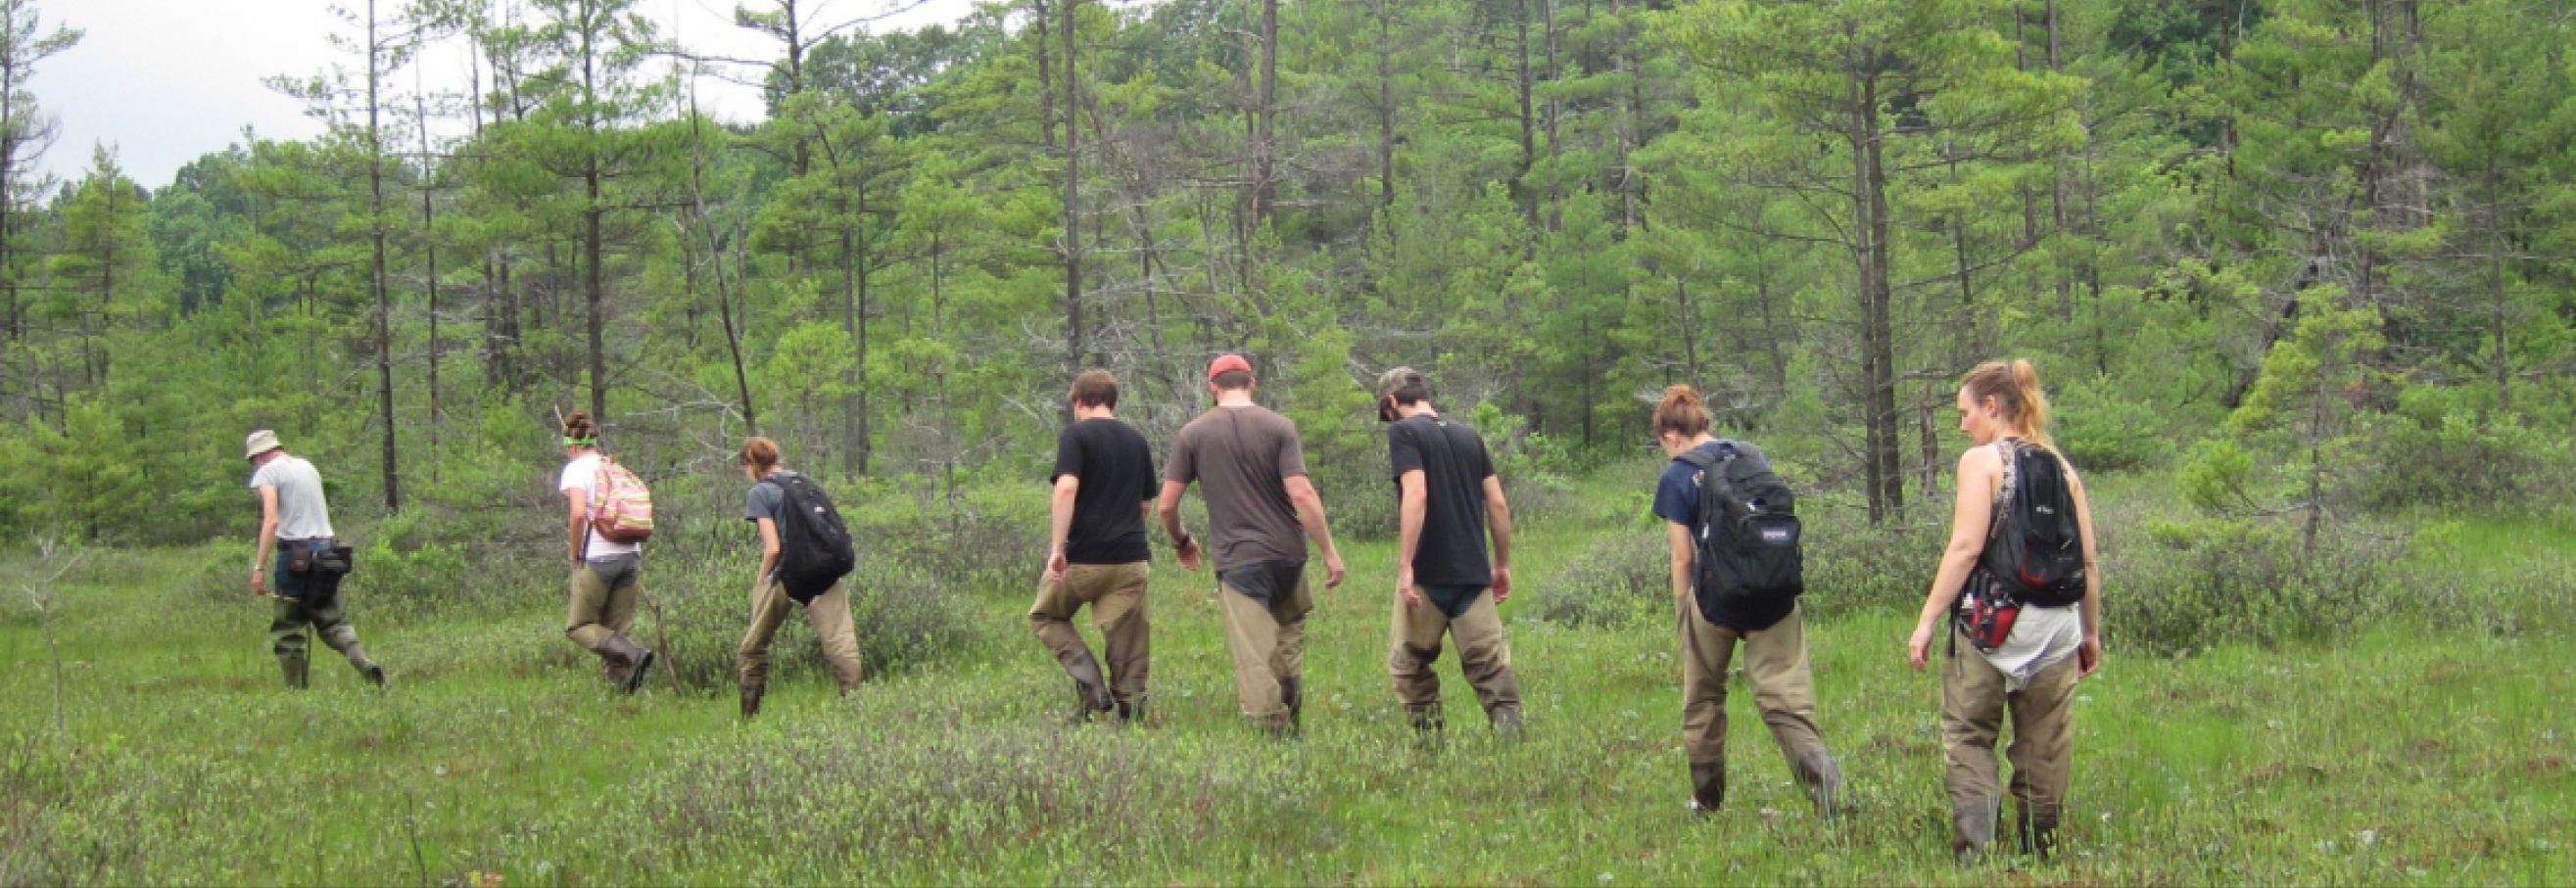 students walking in a wetland